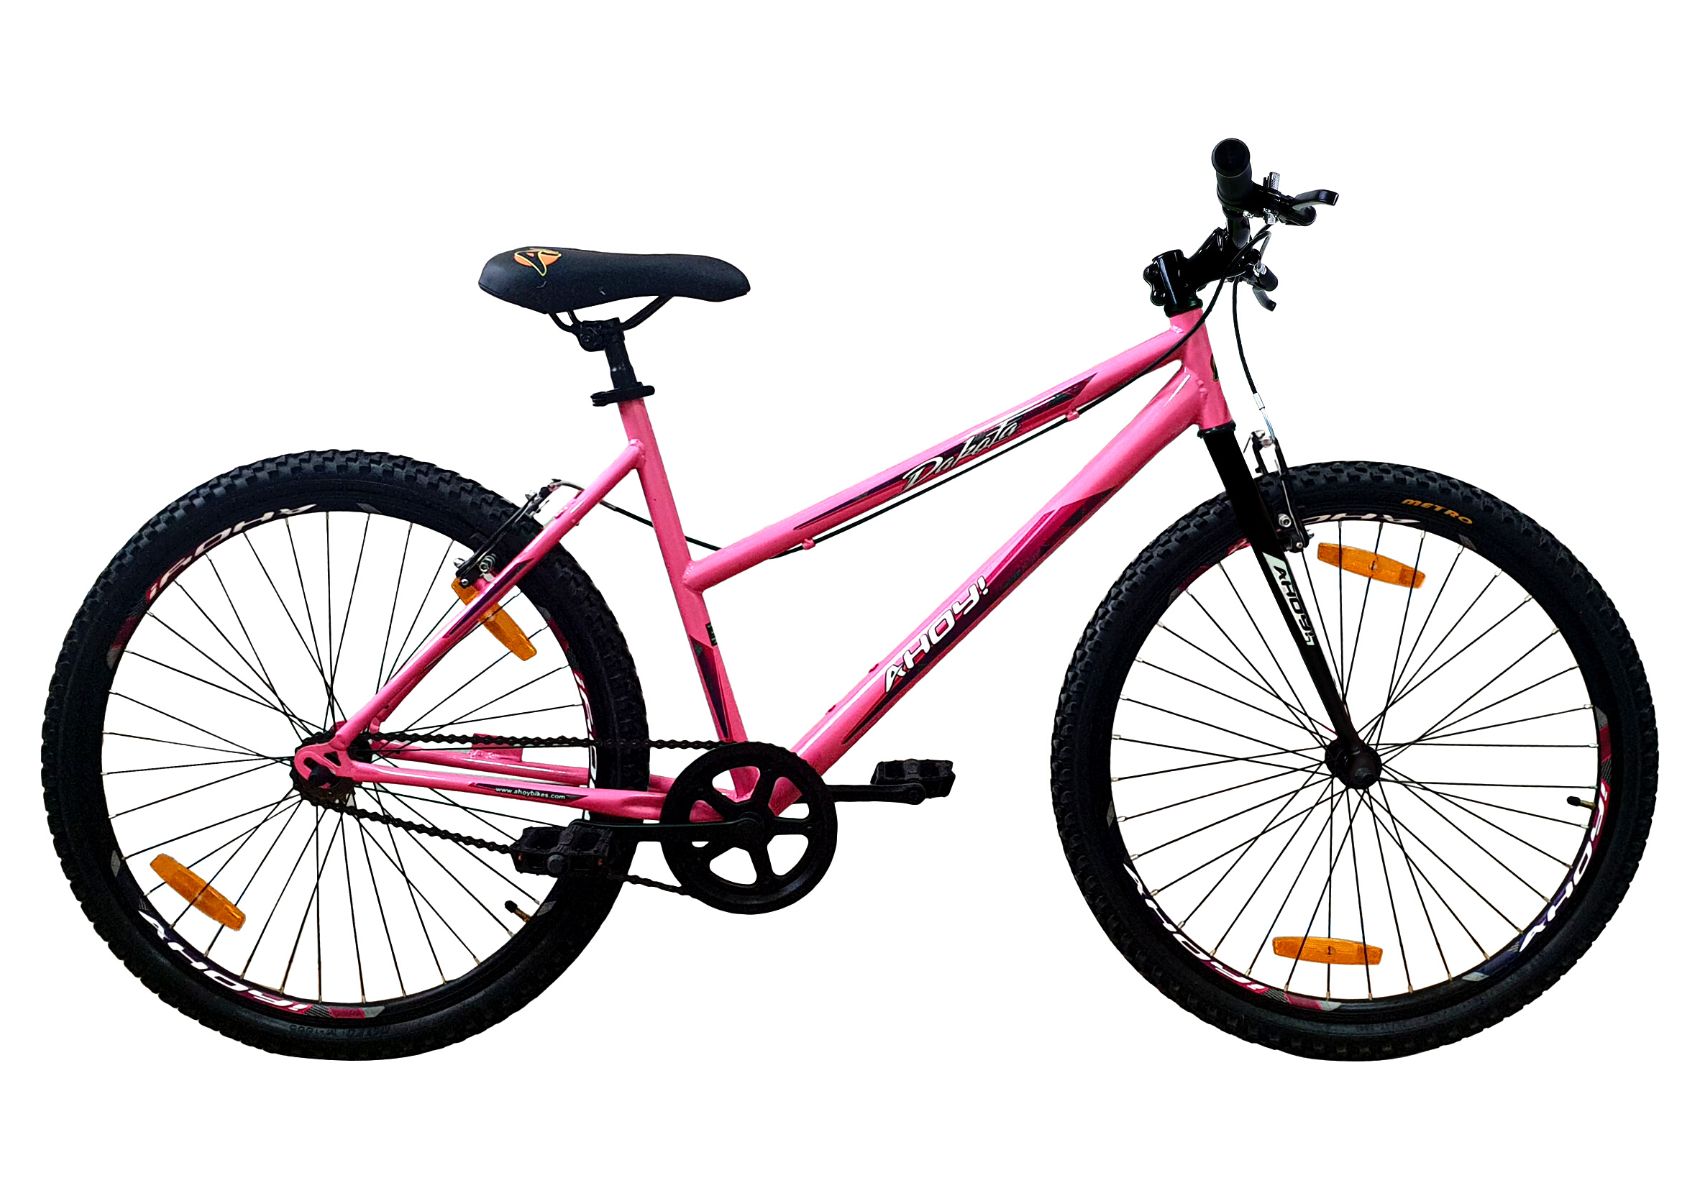 Dakota All Terrain Bike 24T | Buy Pink Non Gear Bike for Women